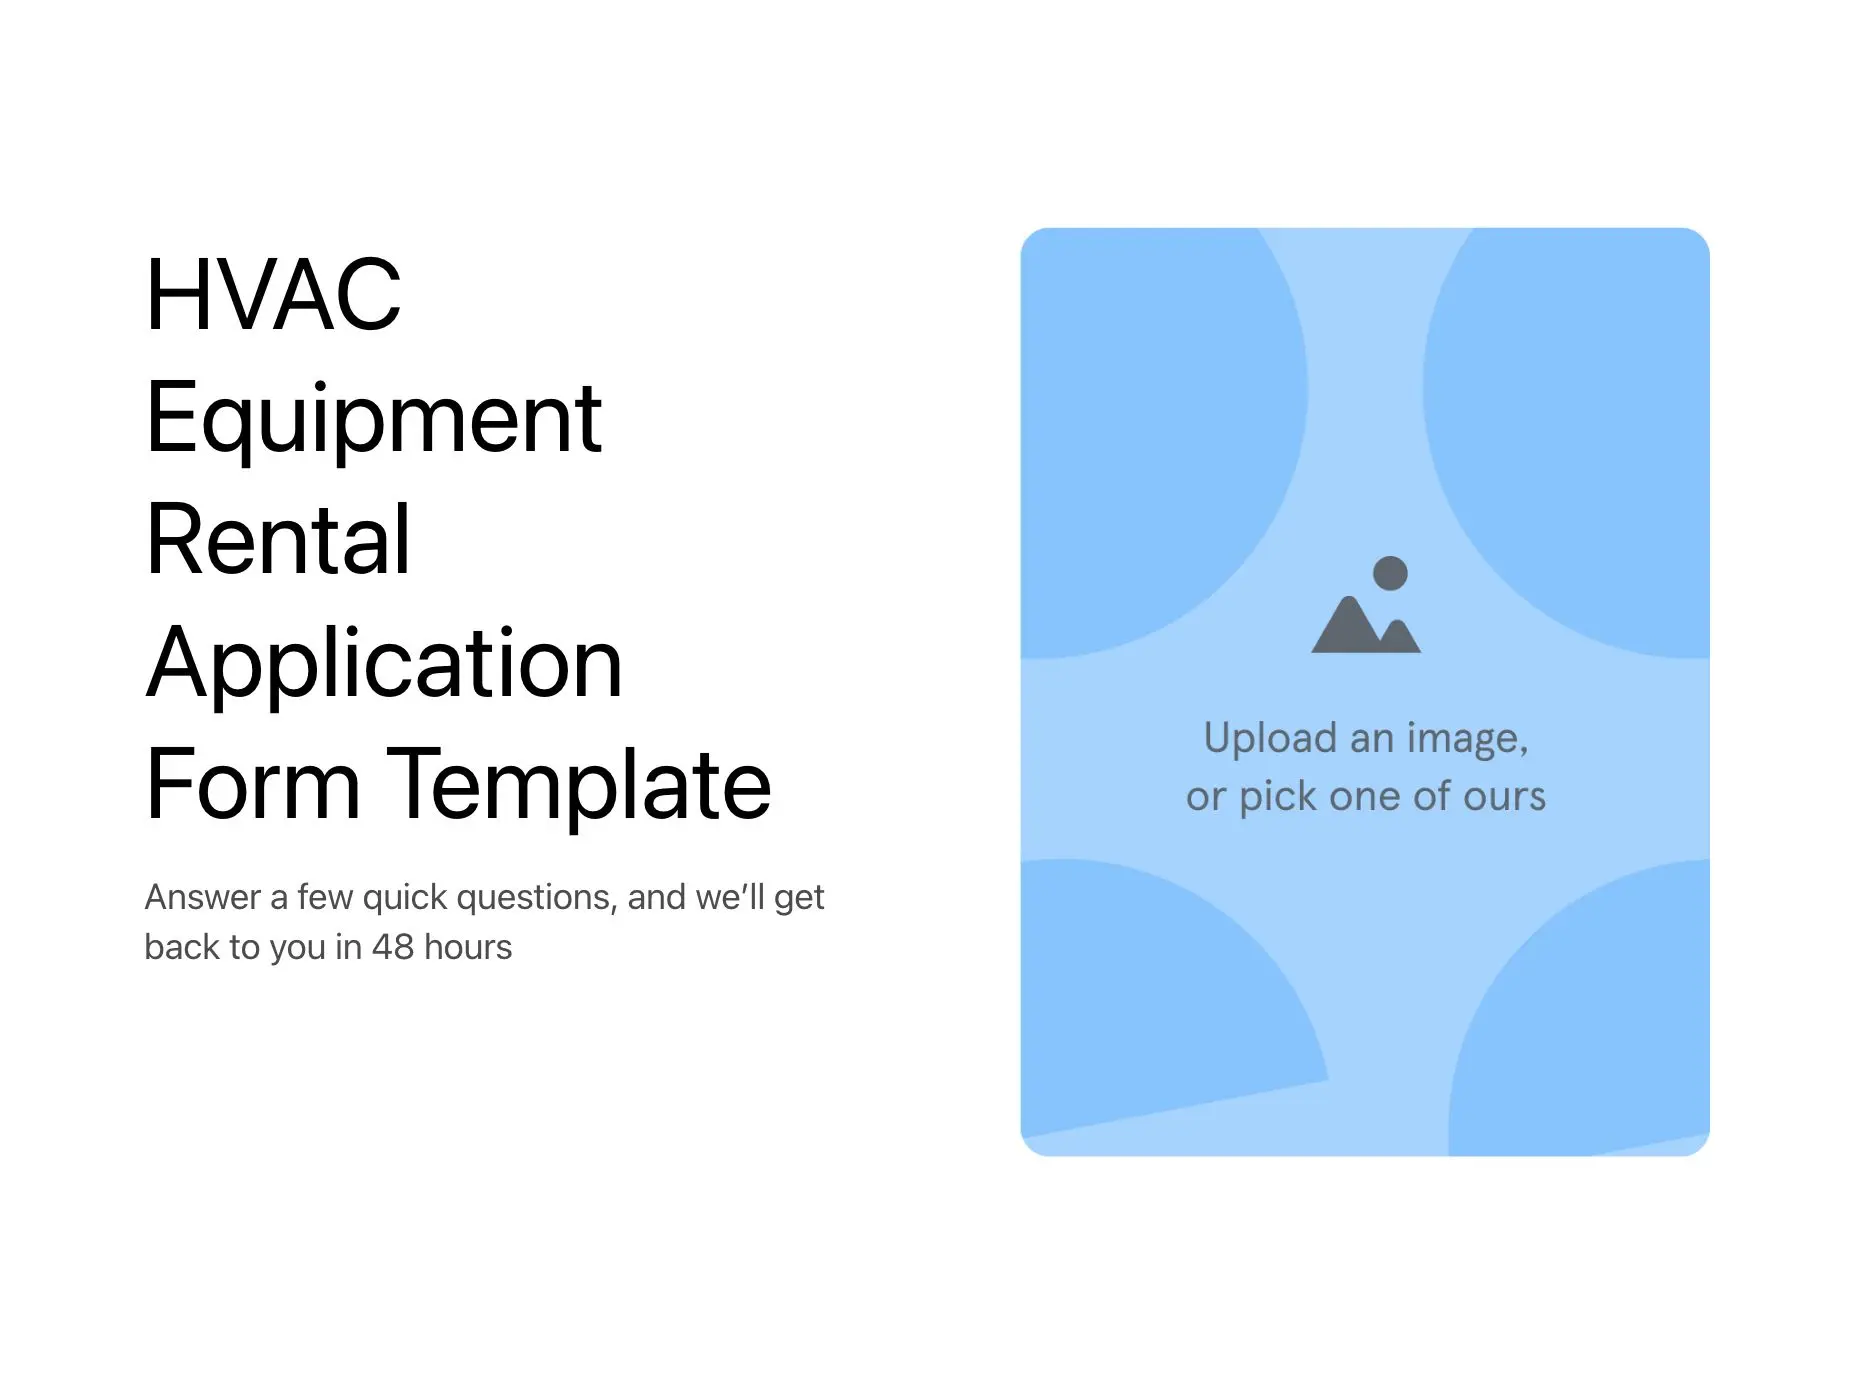 HVAC Equipment Rental Application Form Template Hero